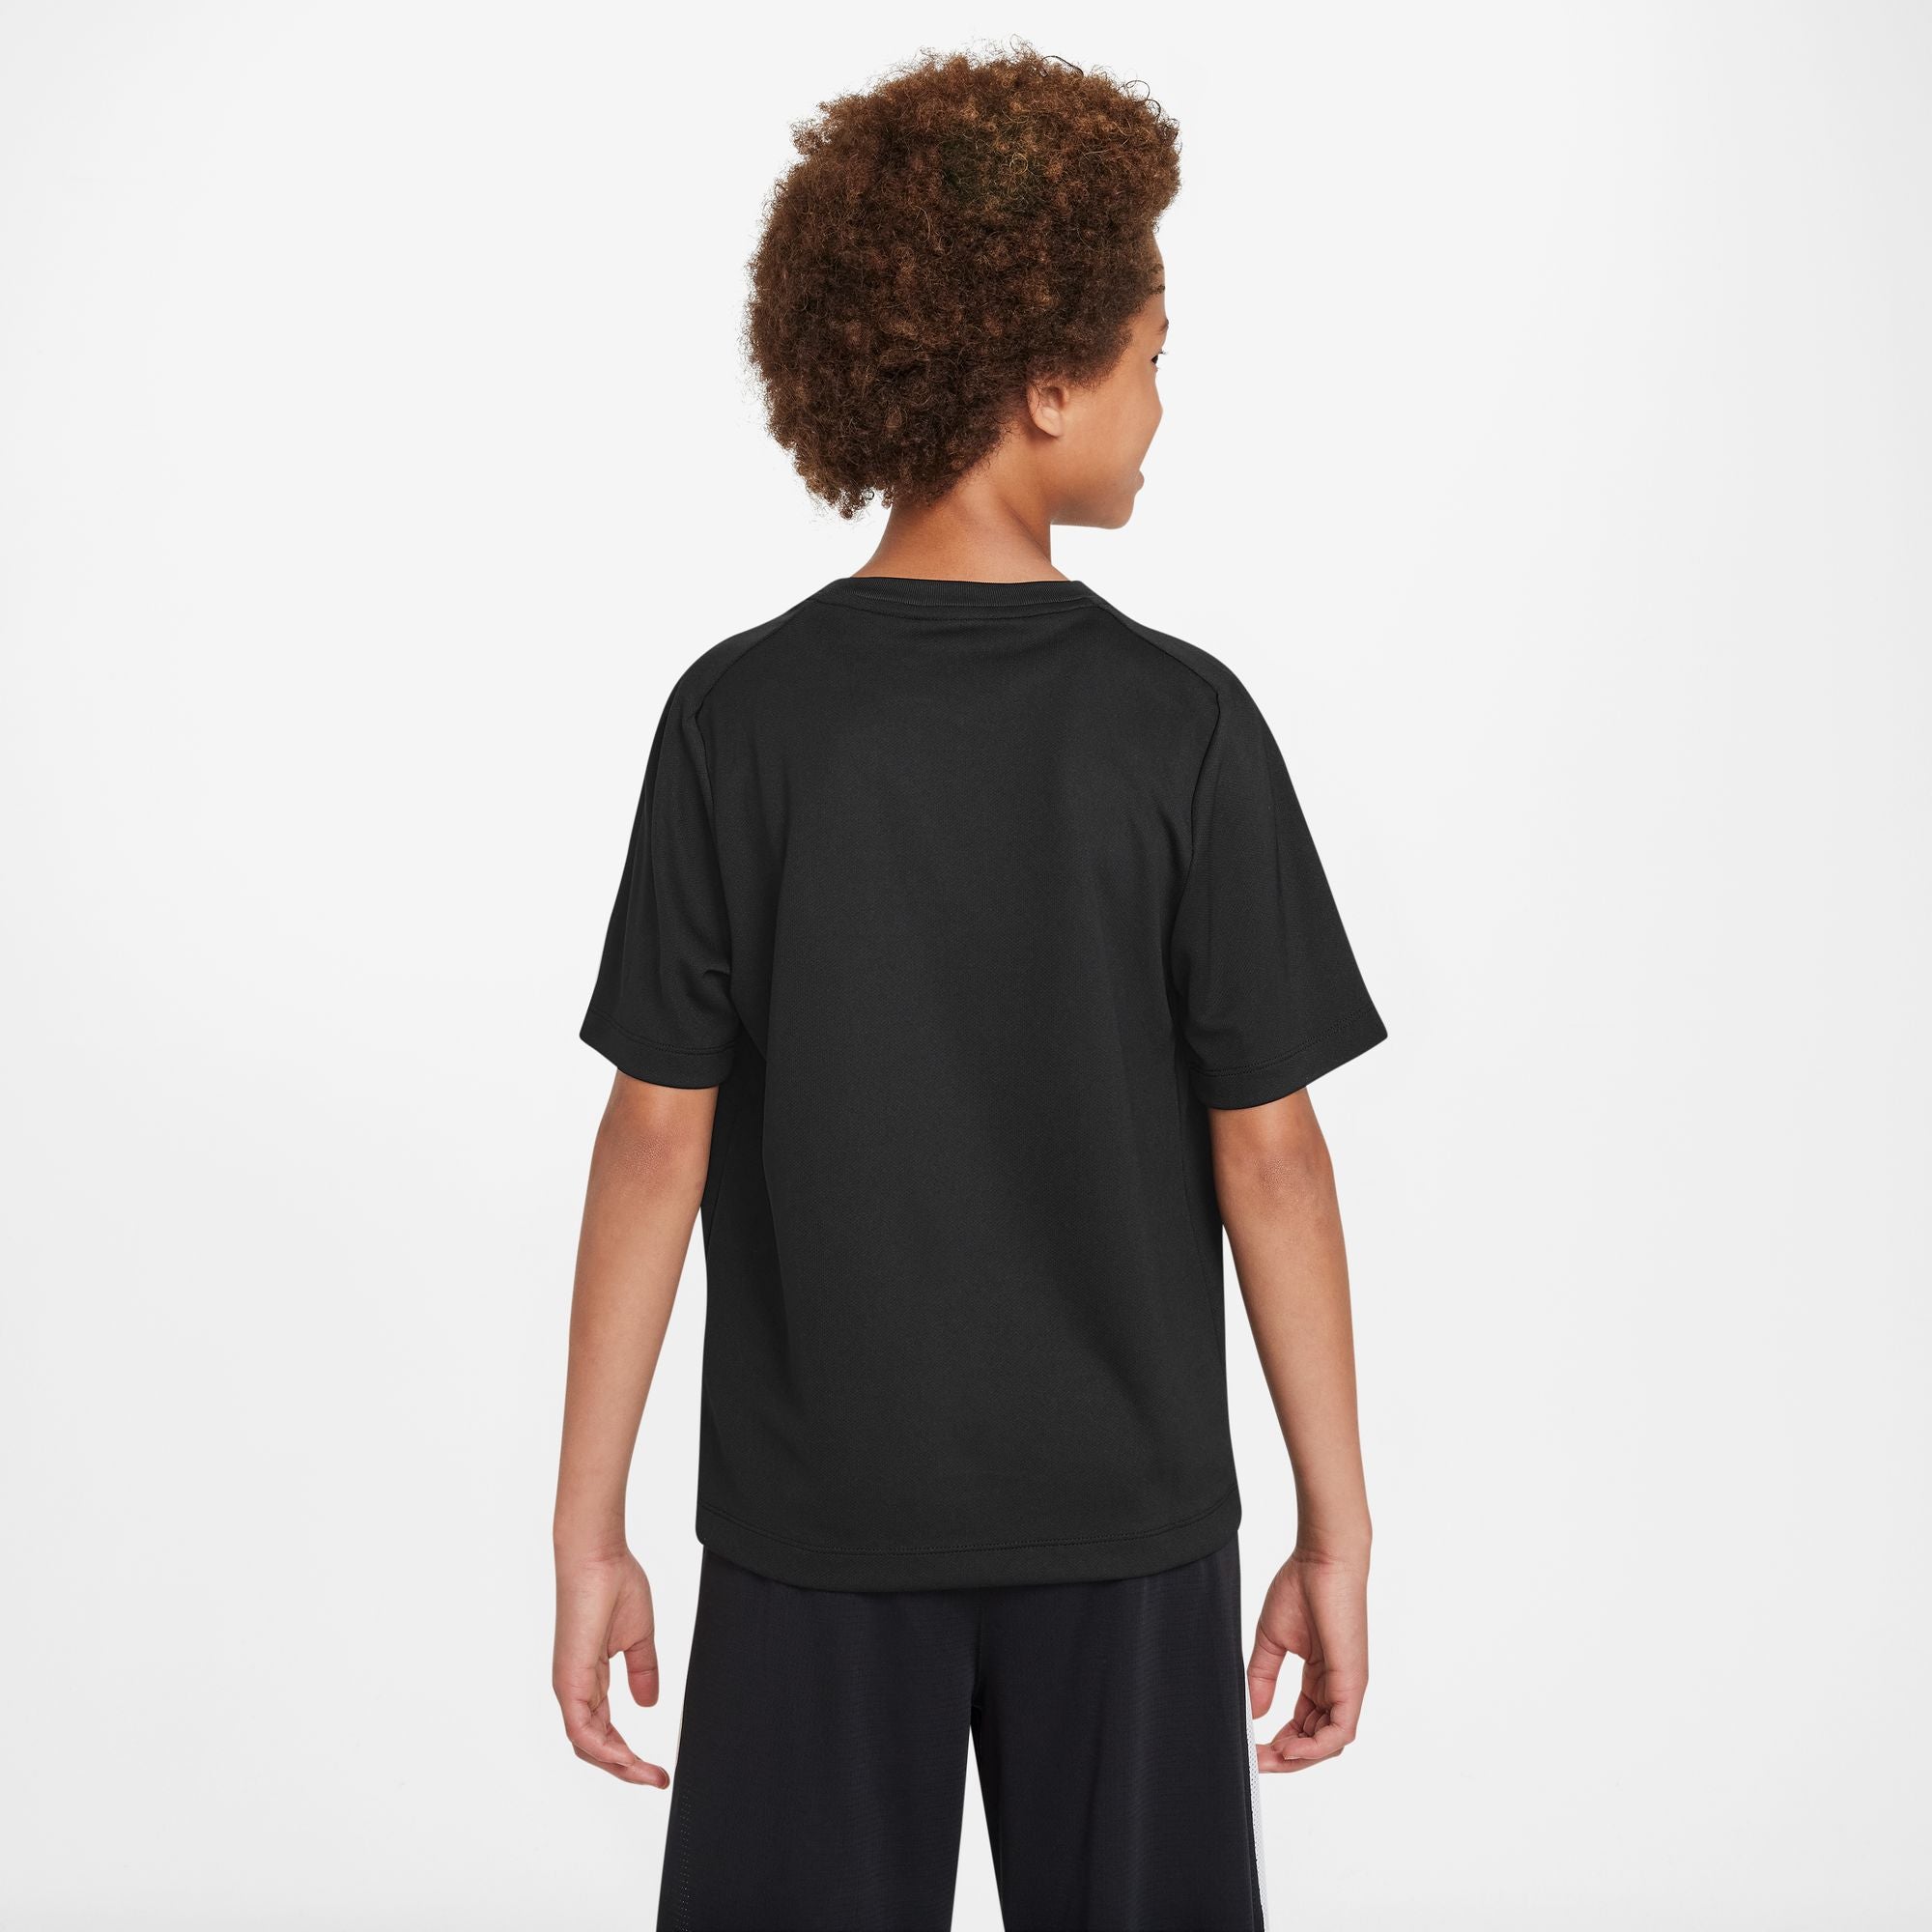 Boys Performance Dri-Fit Short Sleeve T-Shirt